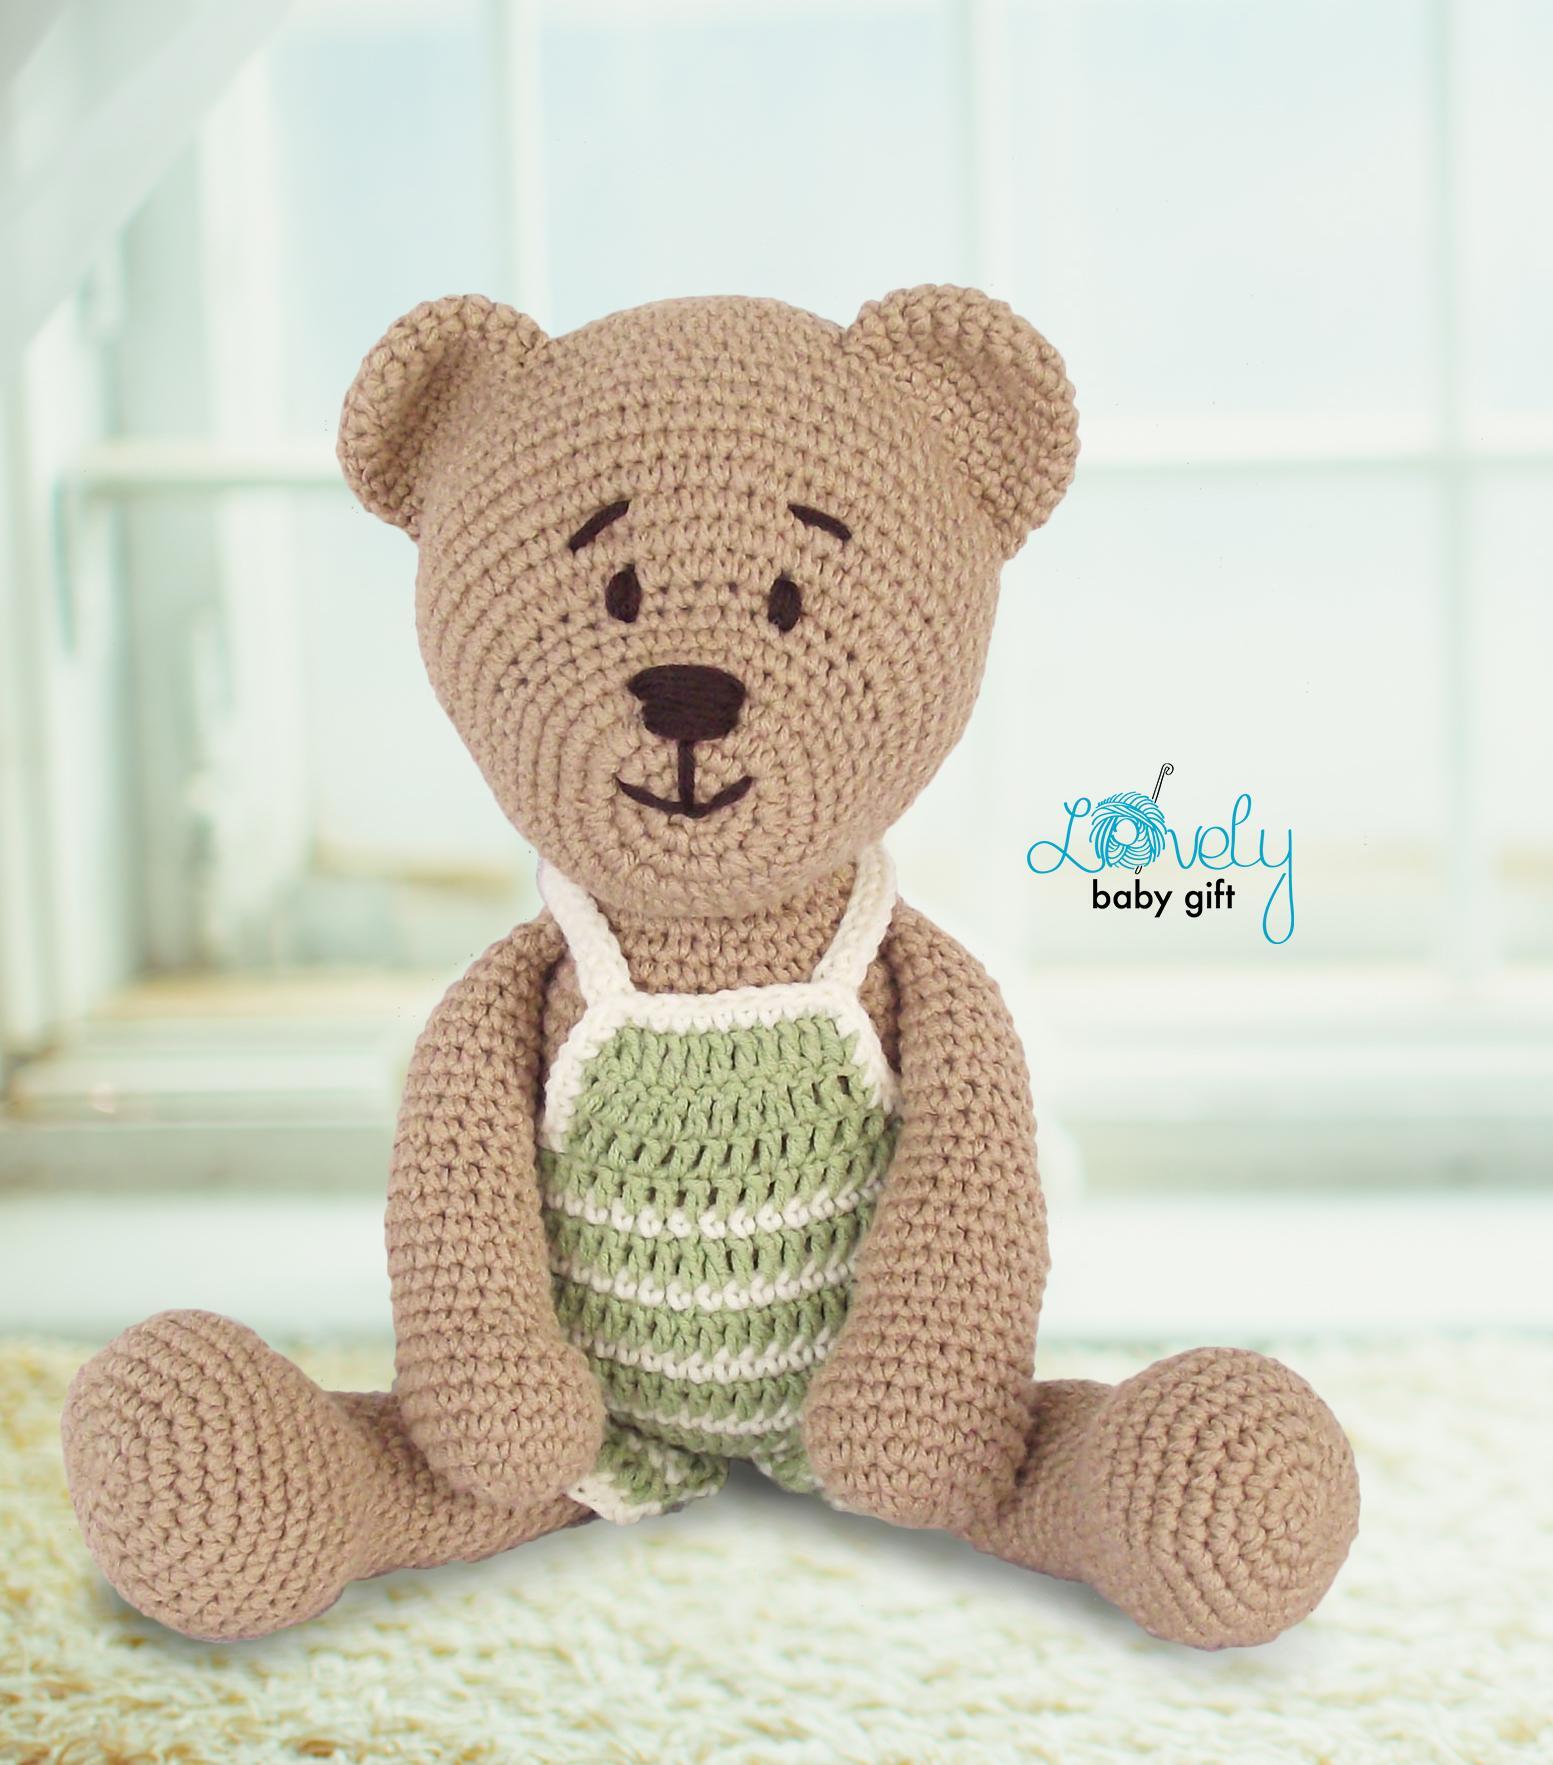 Handmade bear Soft teddy bear Knitted bear in a dress Crochet teddy bear Personalized embroidery Stuffed toy handmade Gift